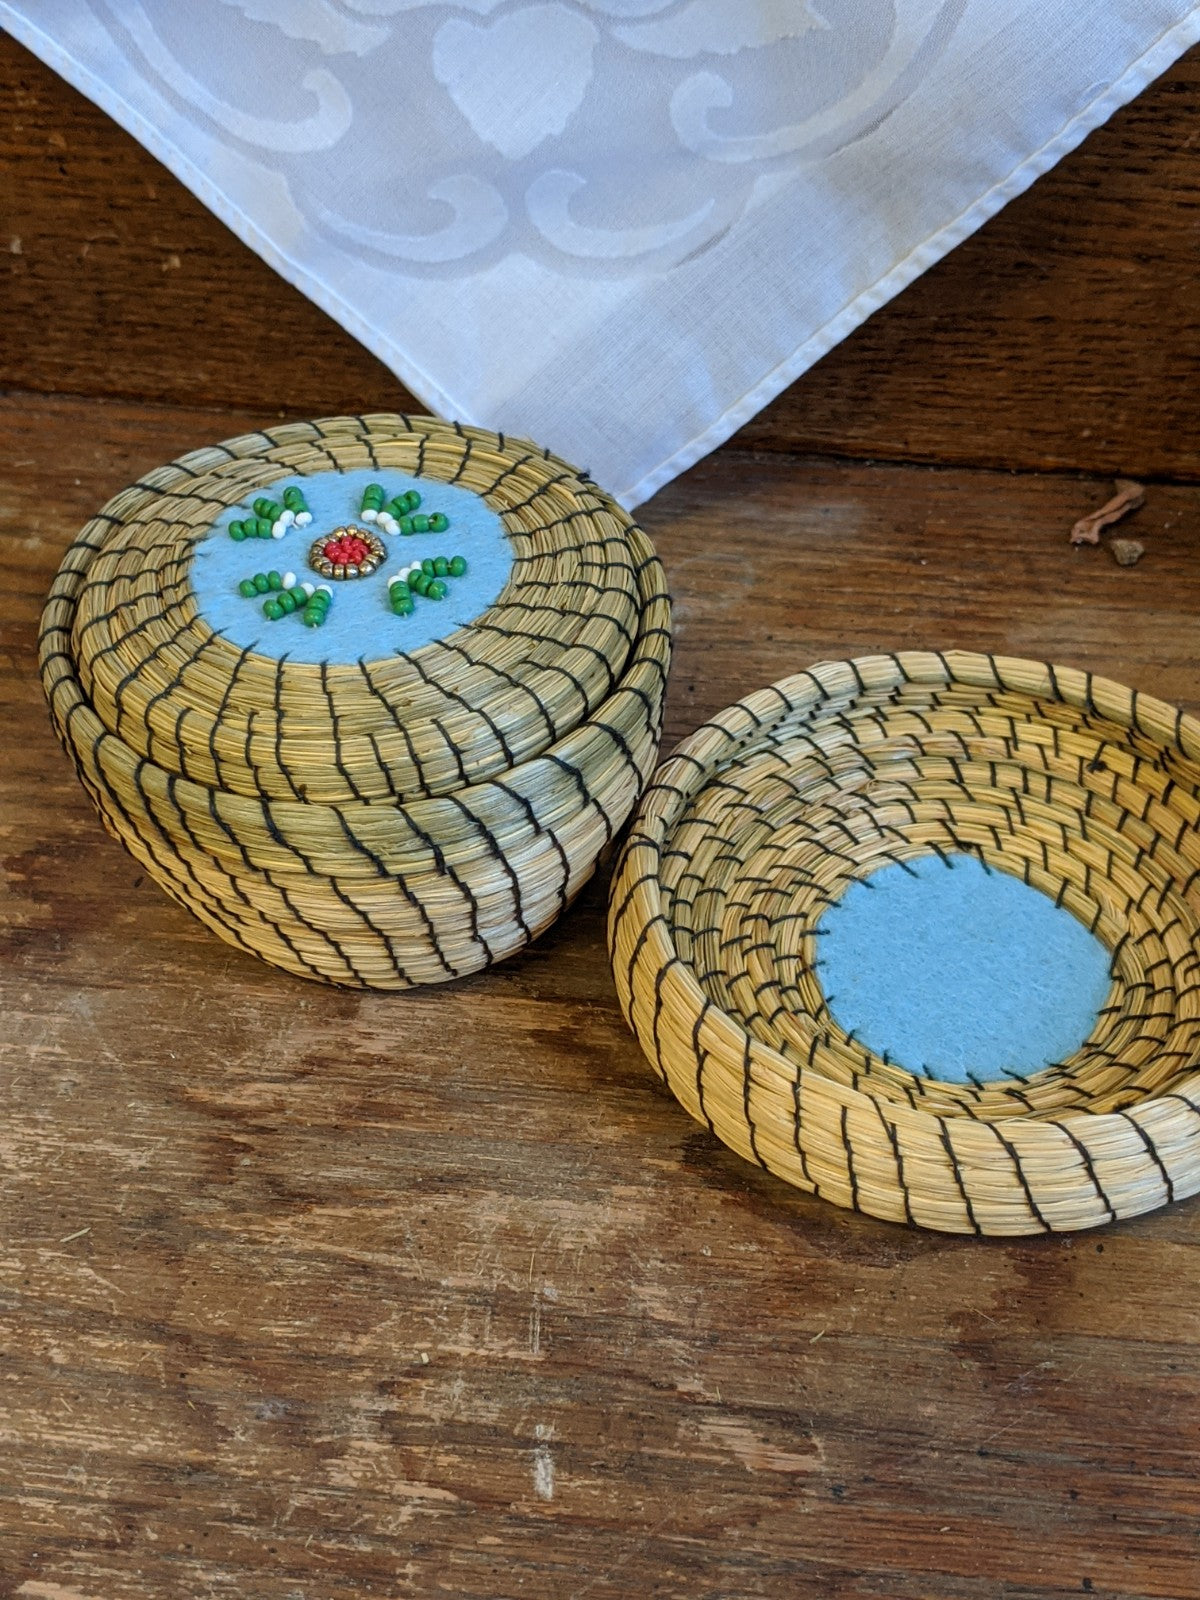 Native American grass-weave Nesting Baskets